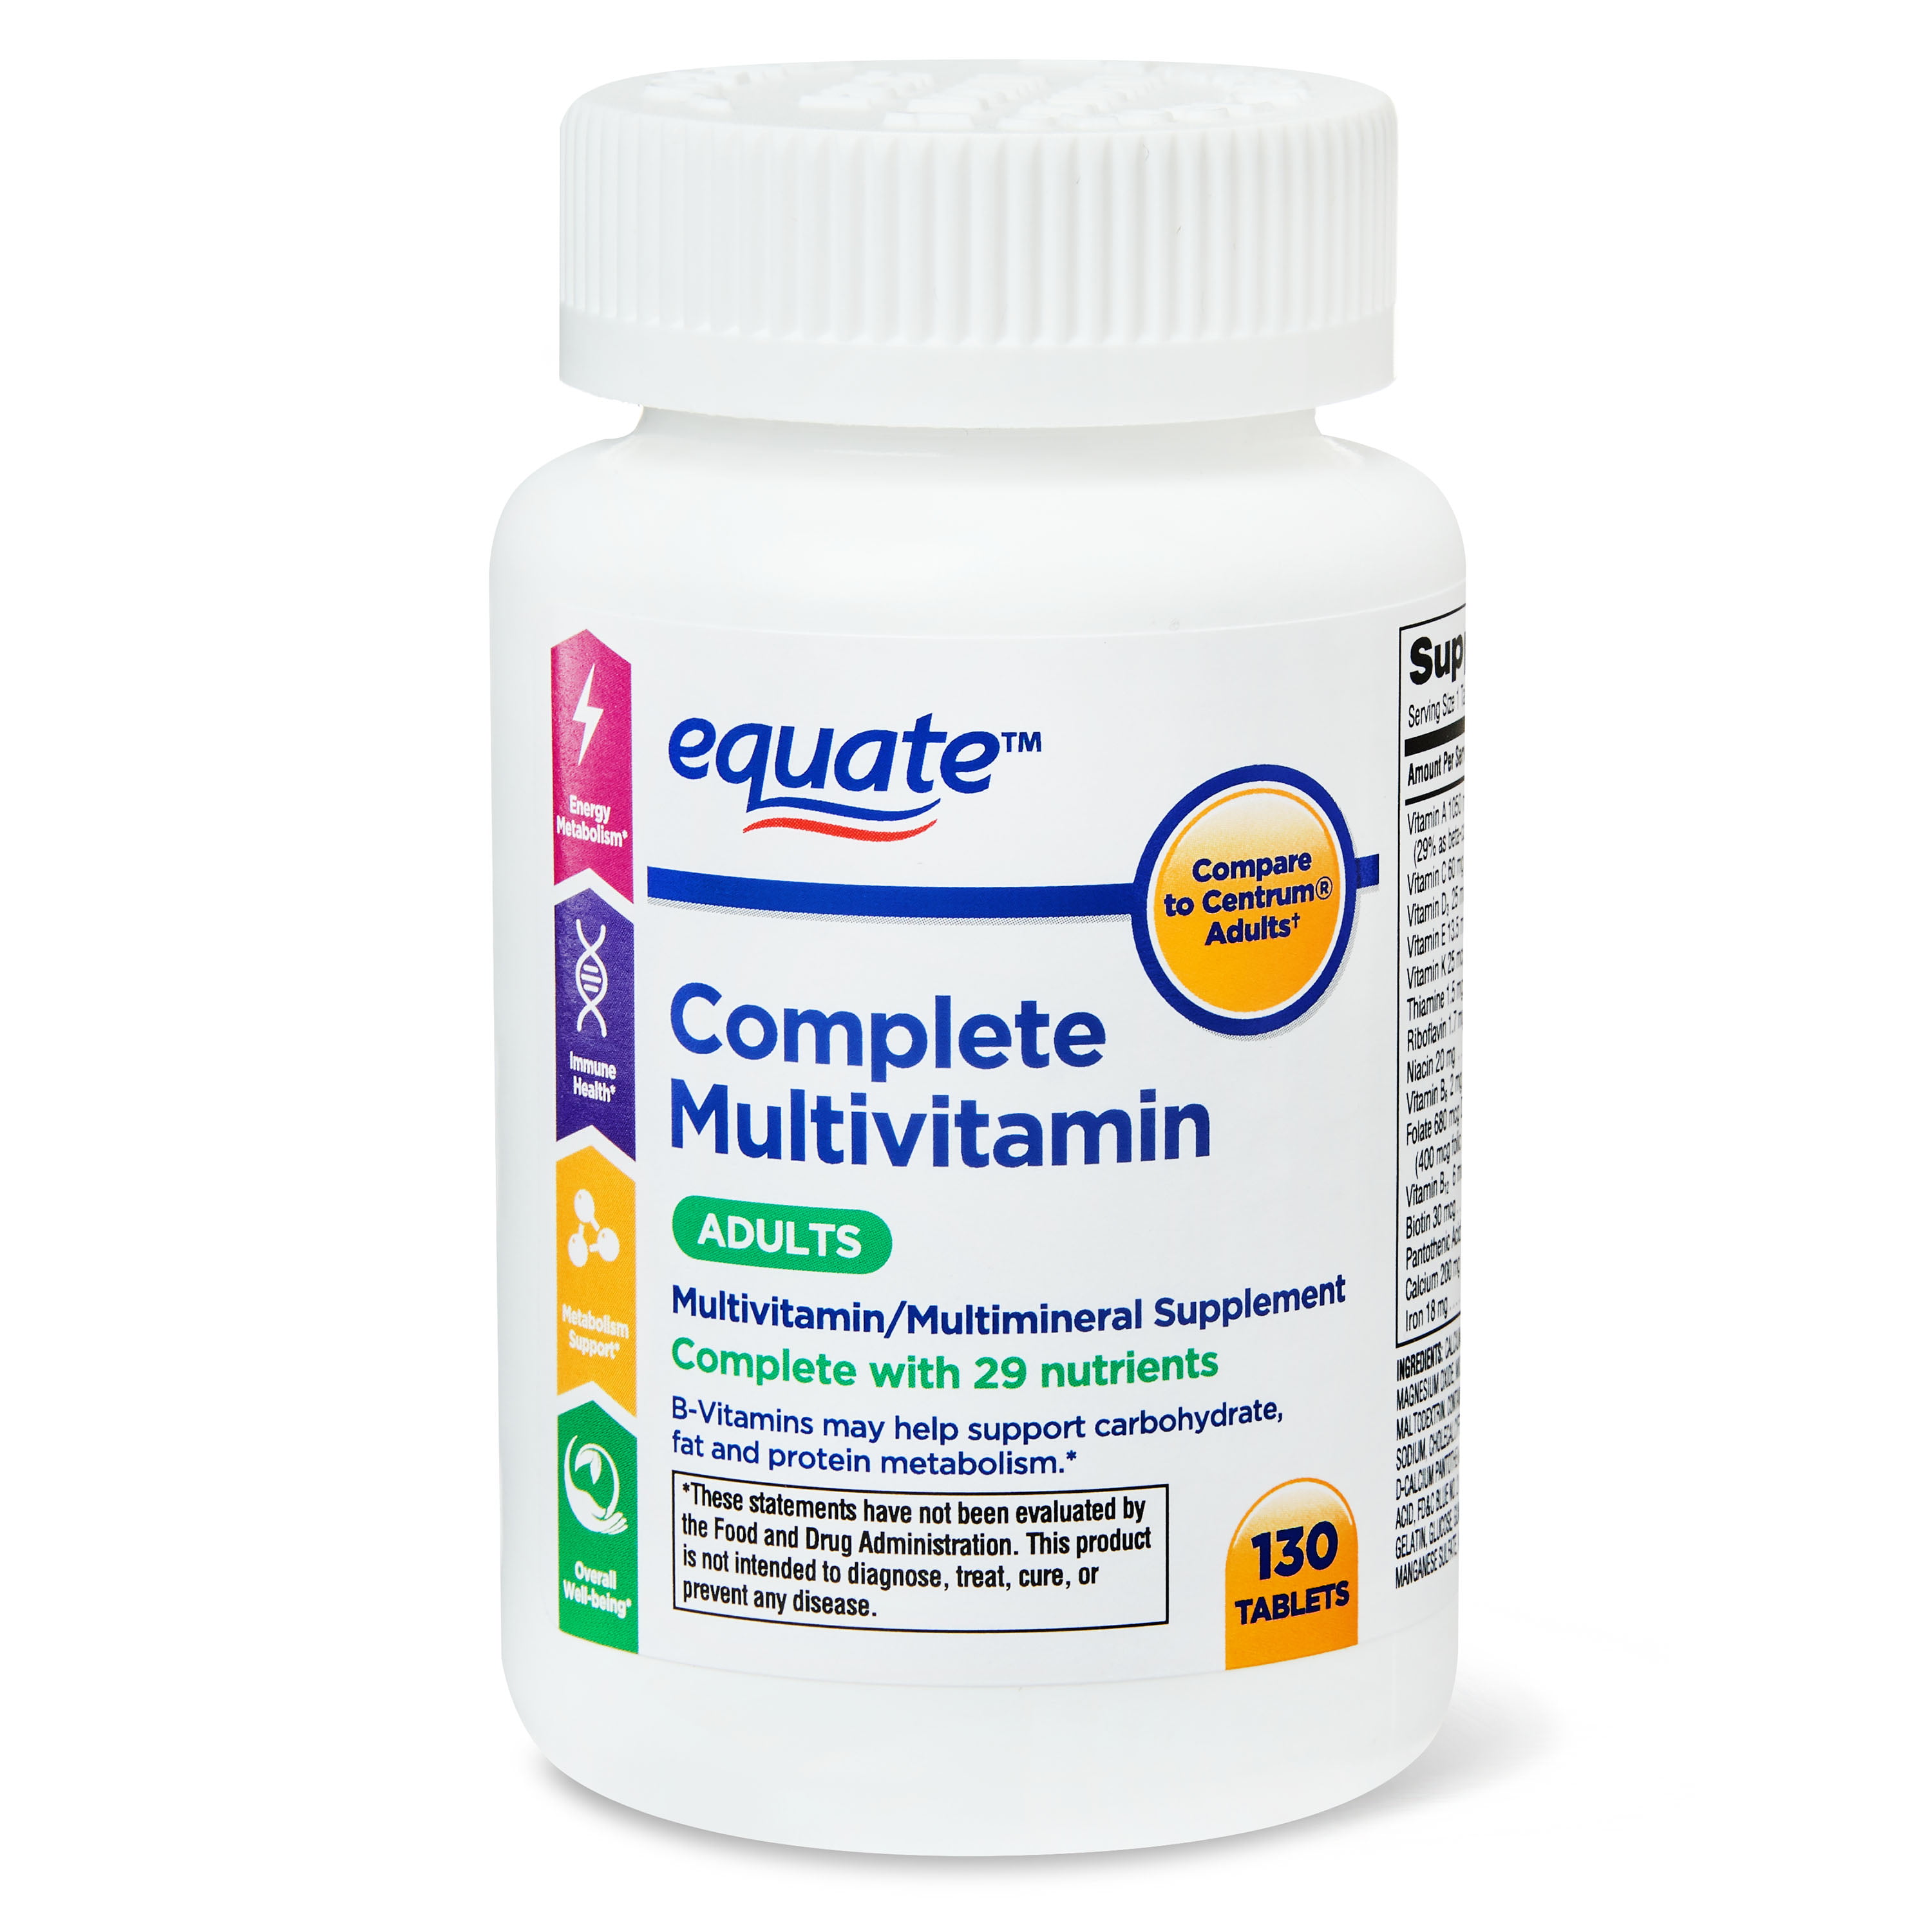 Таблетки multi vitamin. Как пить витамины equate complete Multivitamin.